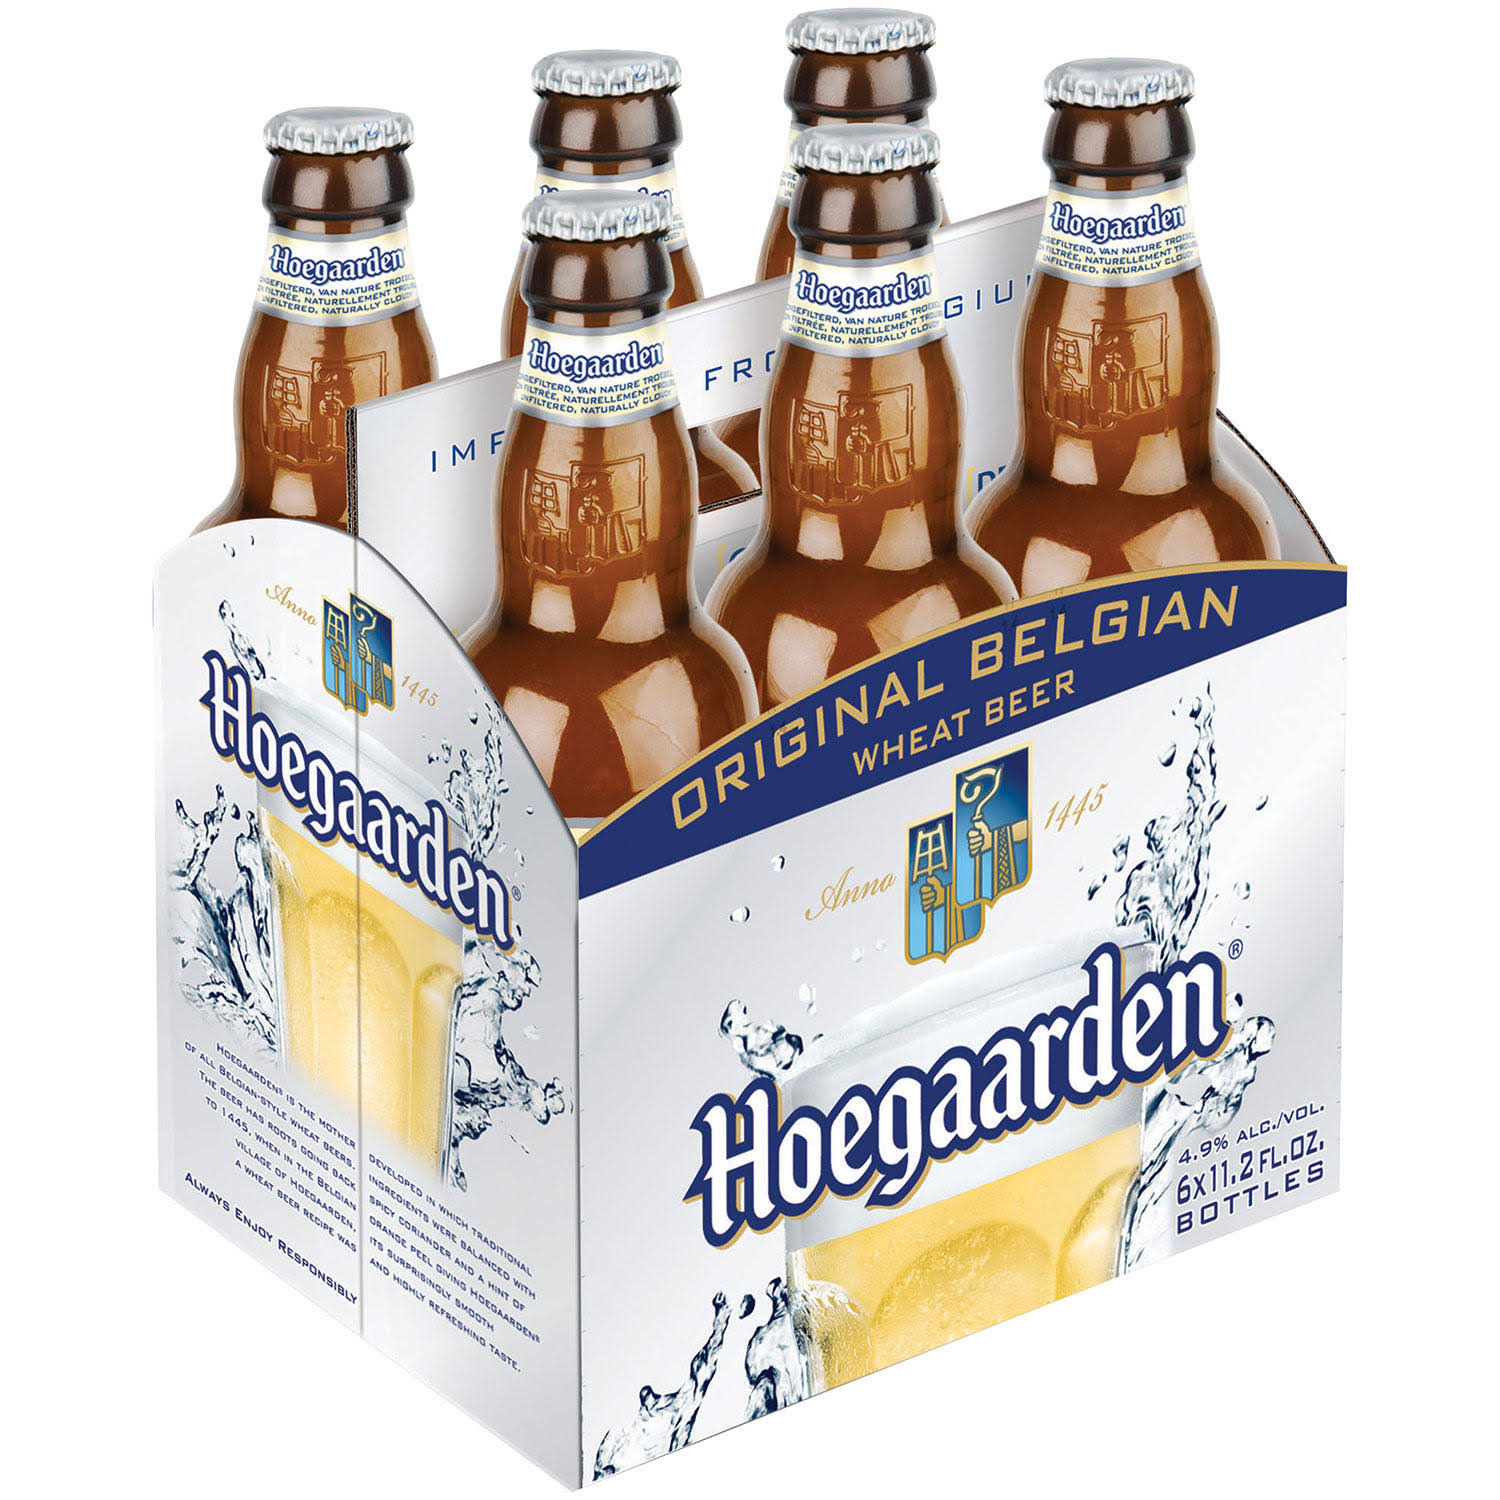 Hoegaarden Beer, Wheat - 6 pack, 11.2 fl oz bottles